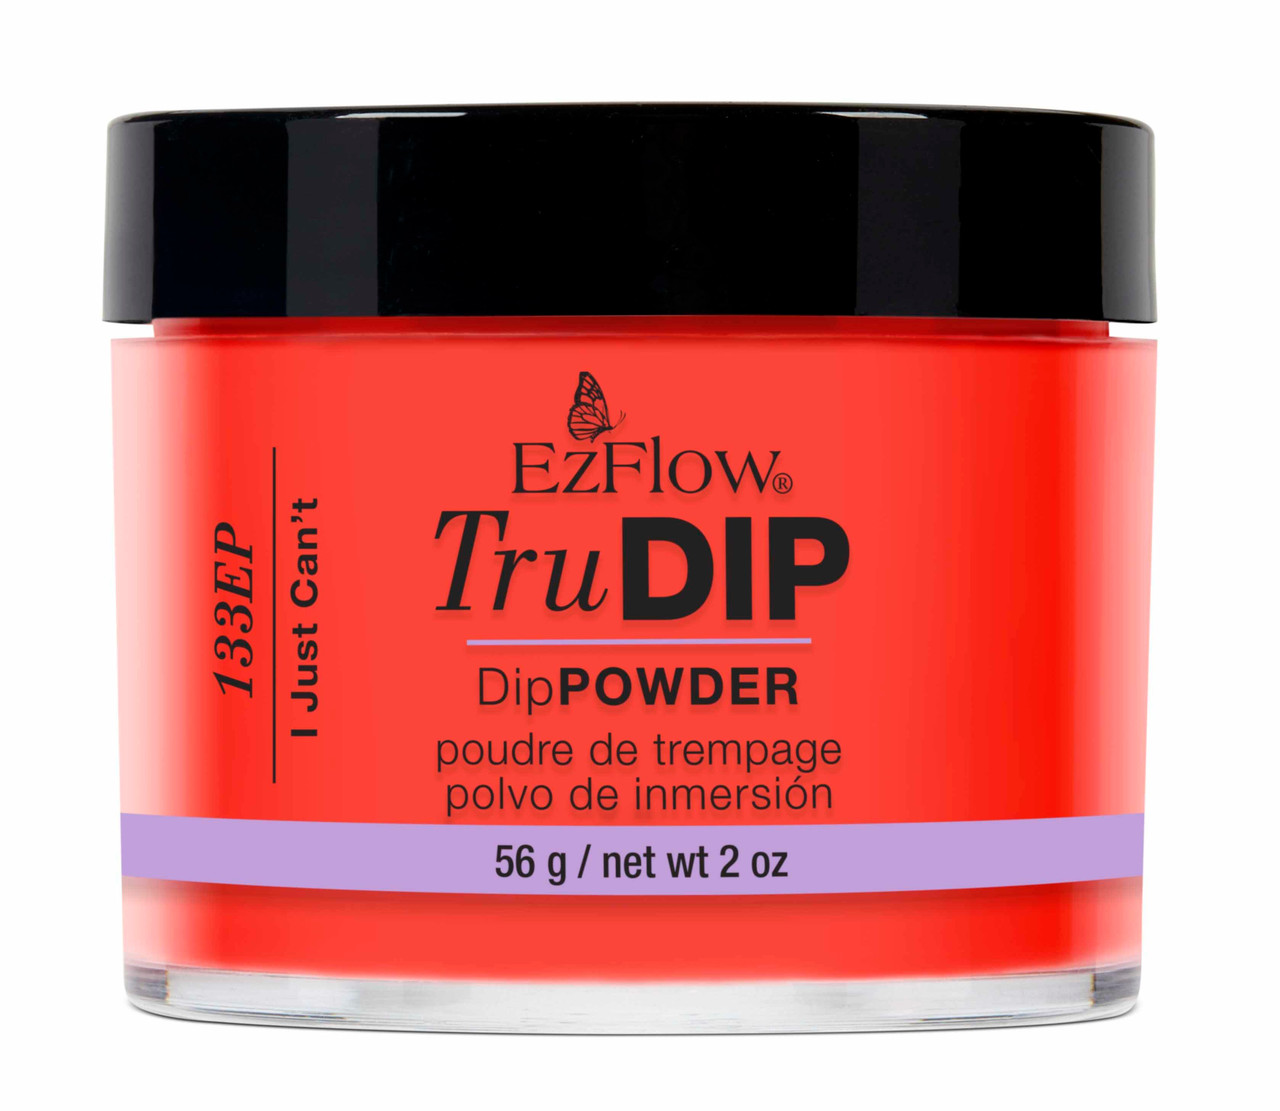 EZ TruDIP Dipping Powder I Just Can't - 2 oz